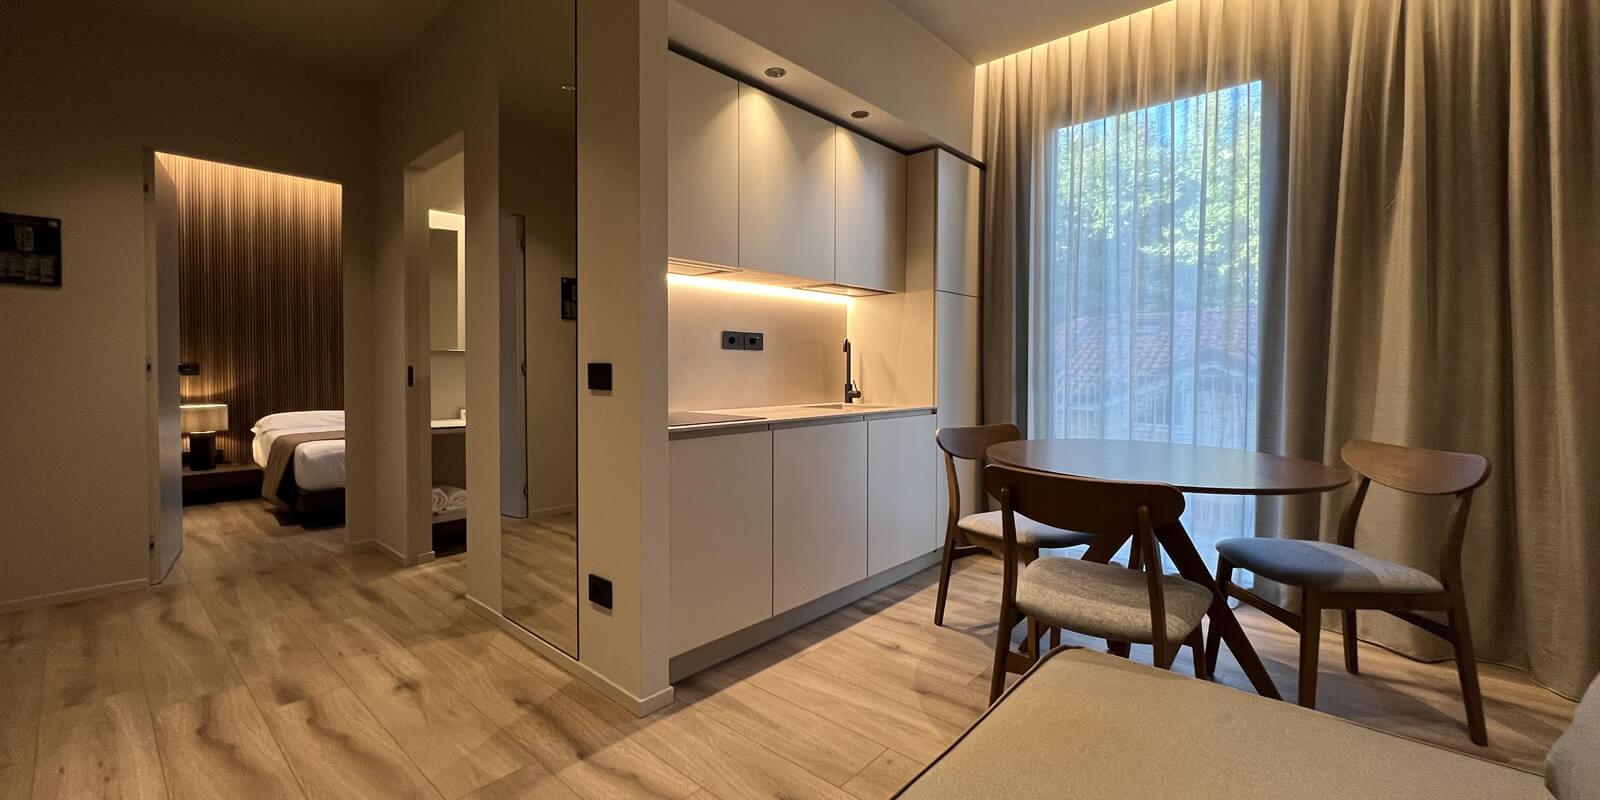 Moderno appartamento con cucina, sala da pranzo e camera da letto separata.